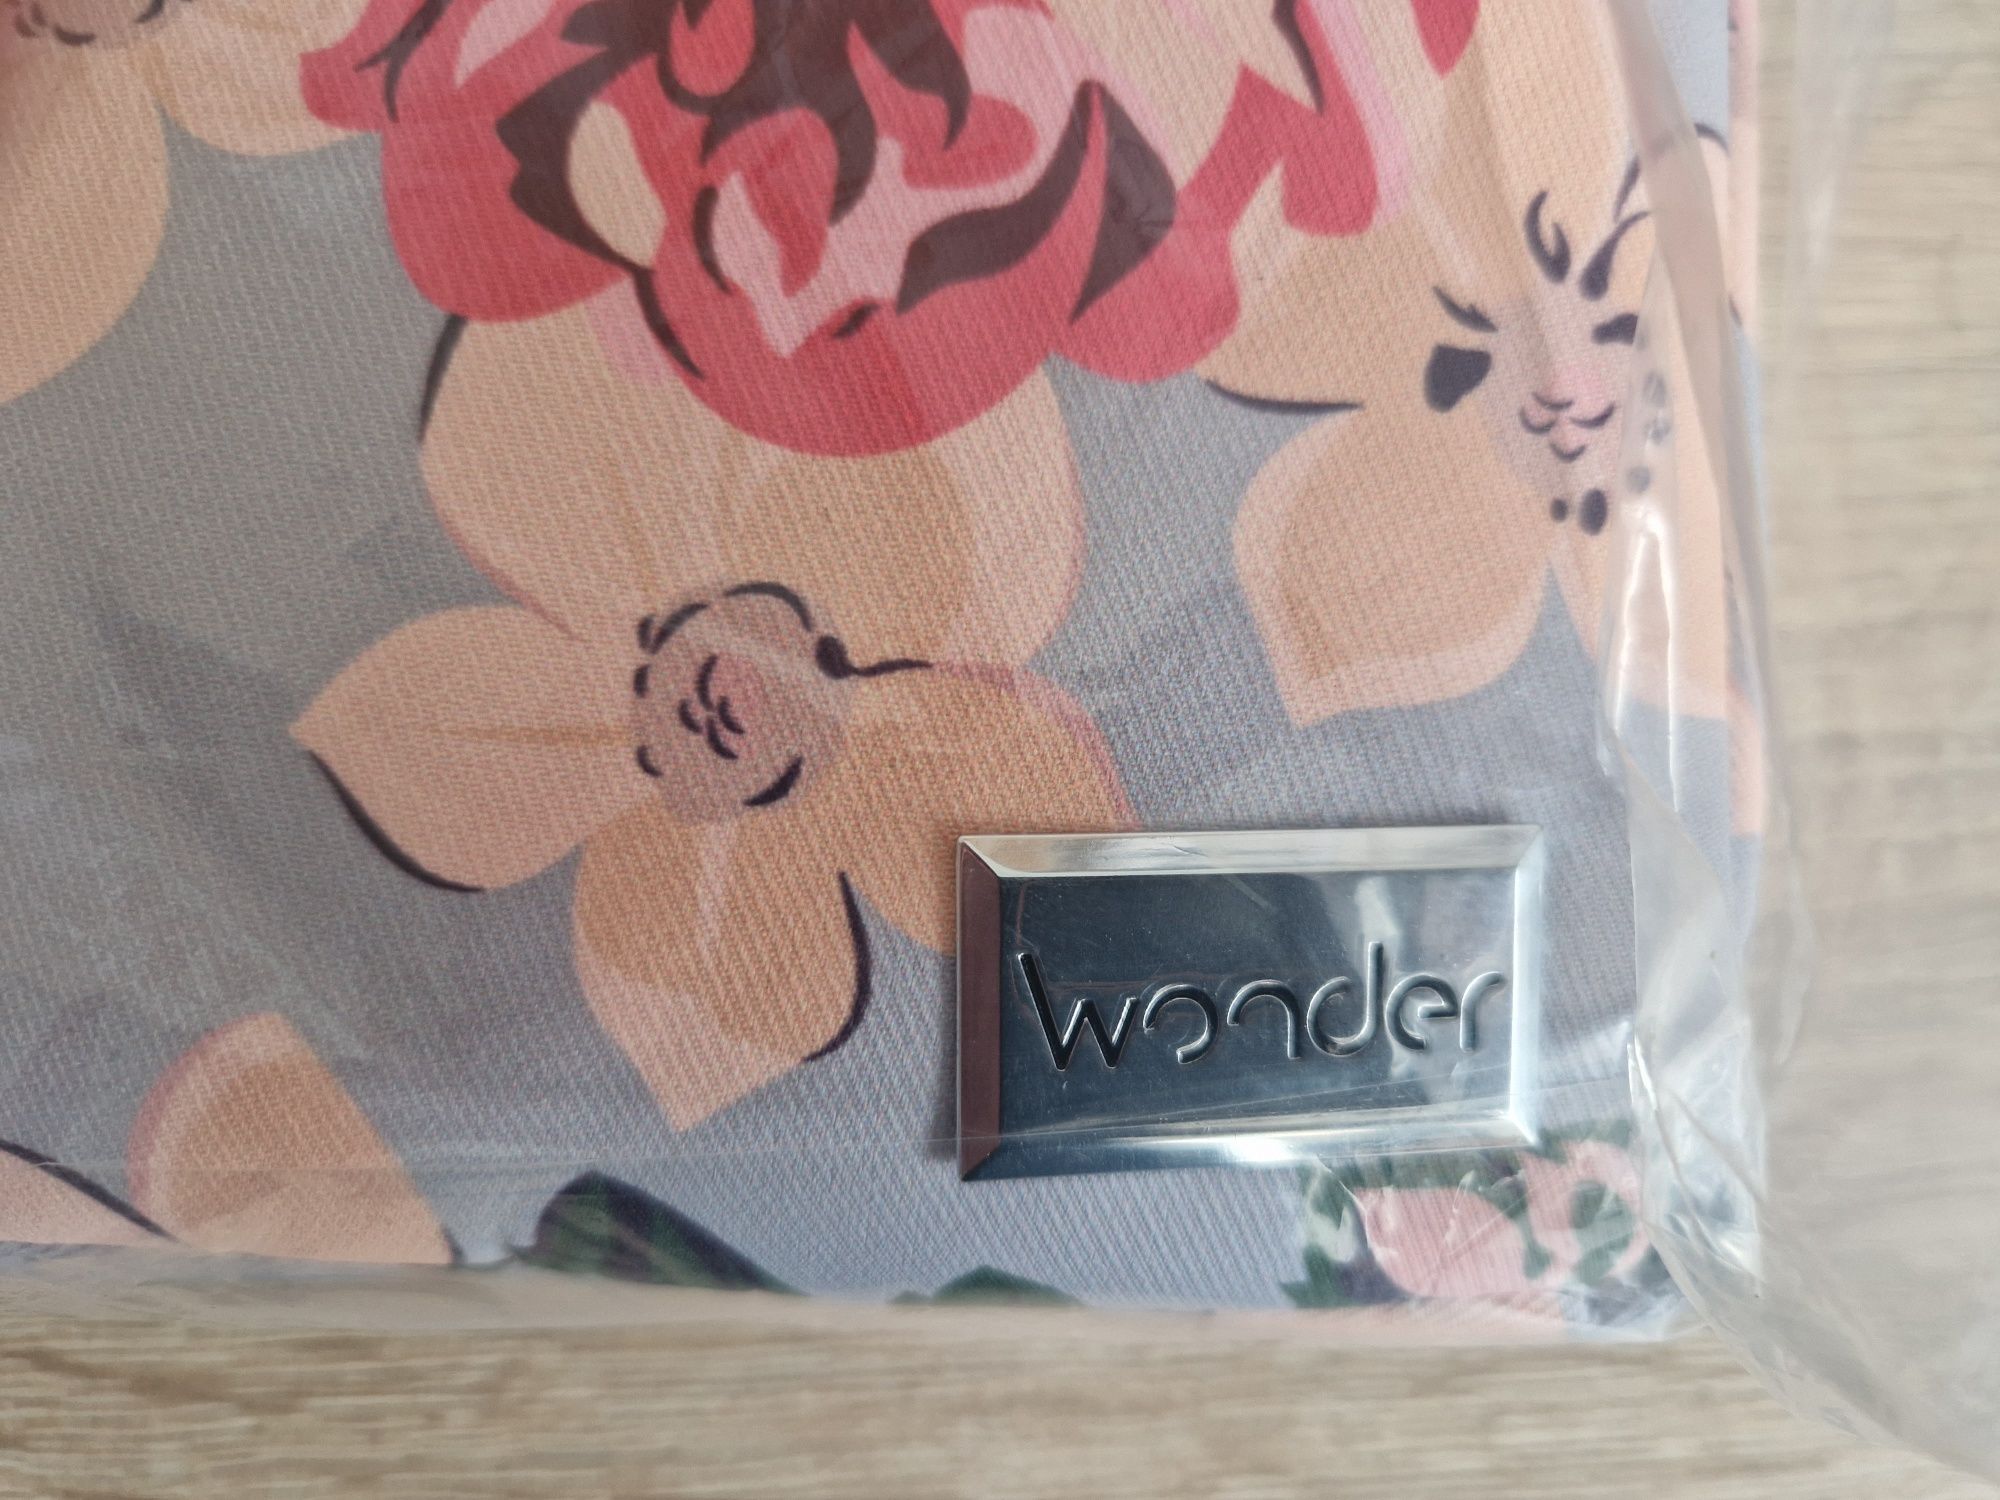 Torba Wonder Briefcase Laptop 15-16 cali szare róże